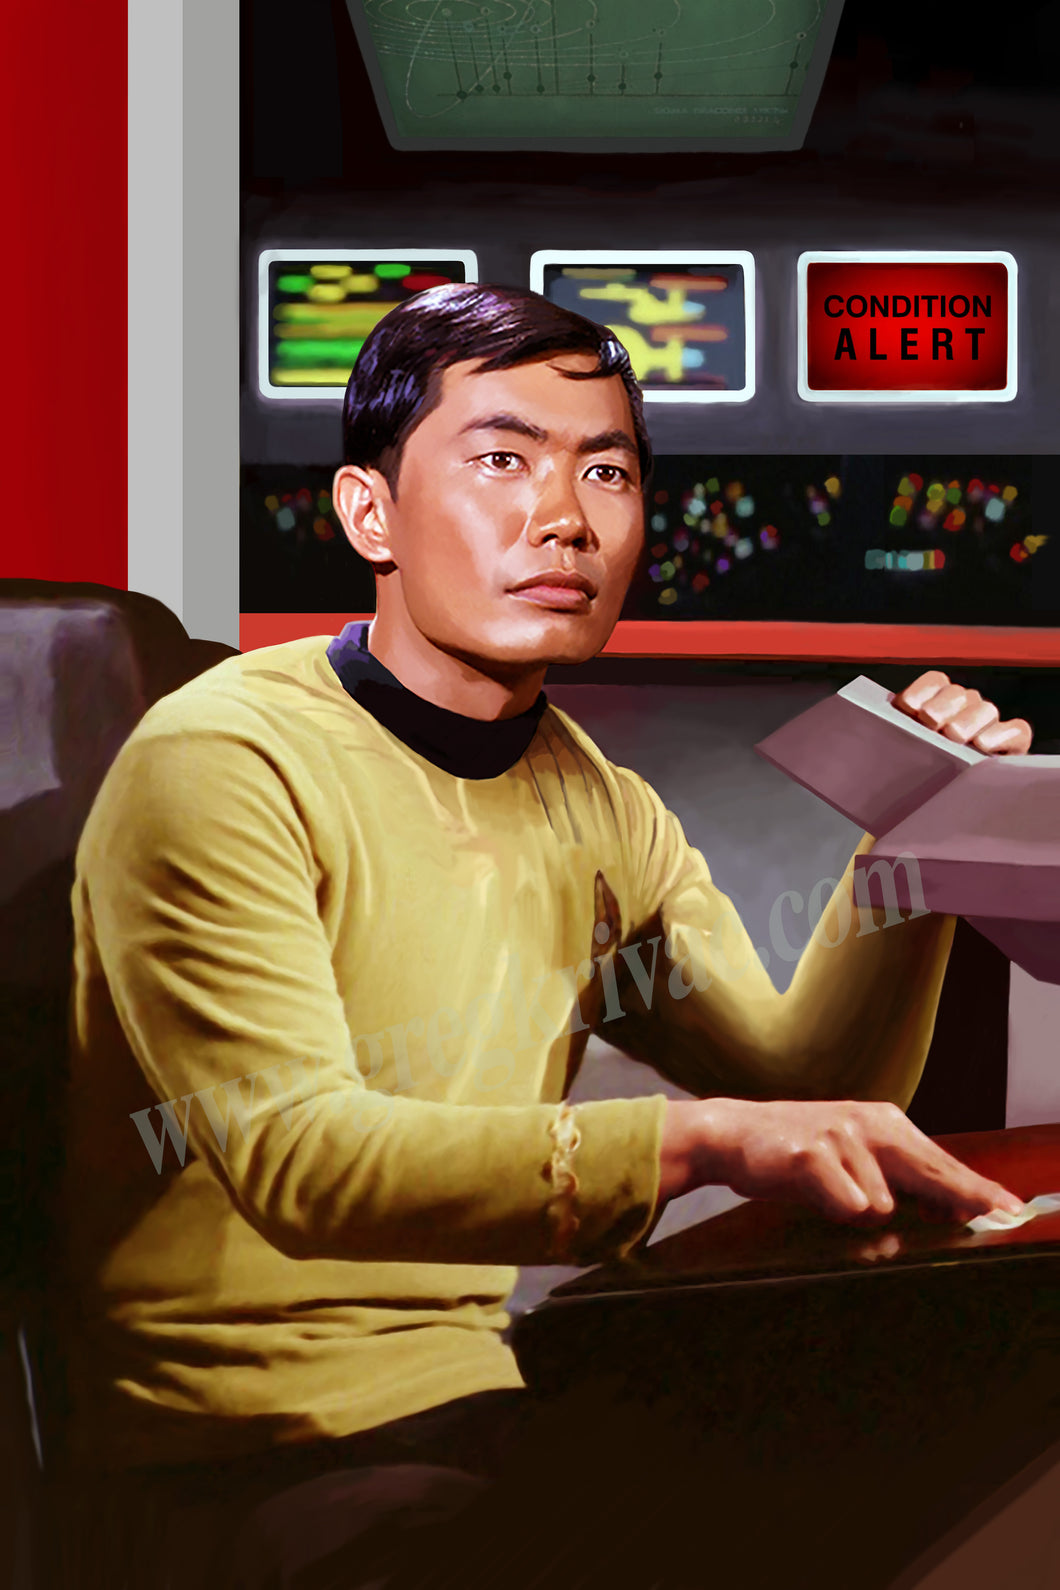 Star Trek: LT Hikaru Sulu Limited Edition Glicee signed and numbered